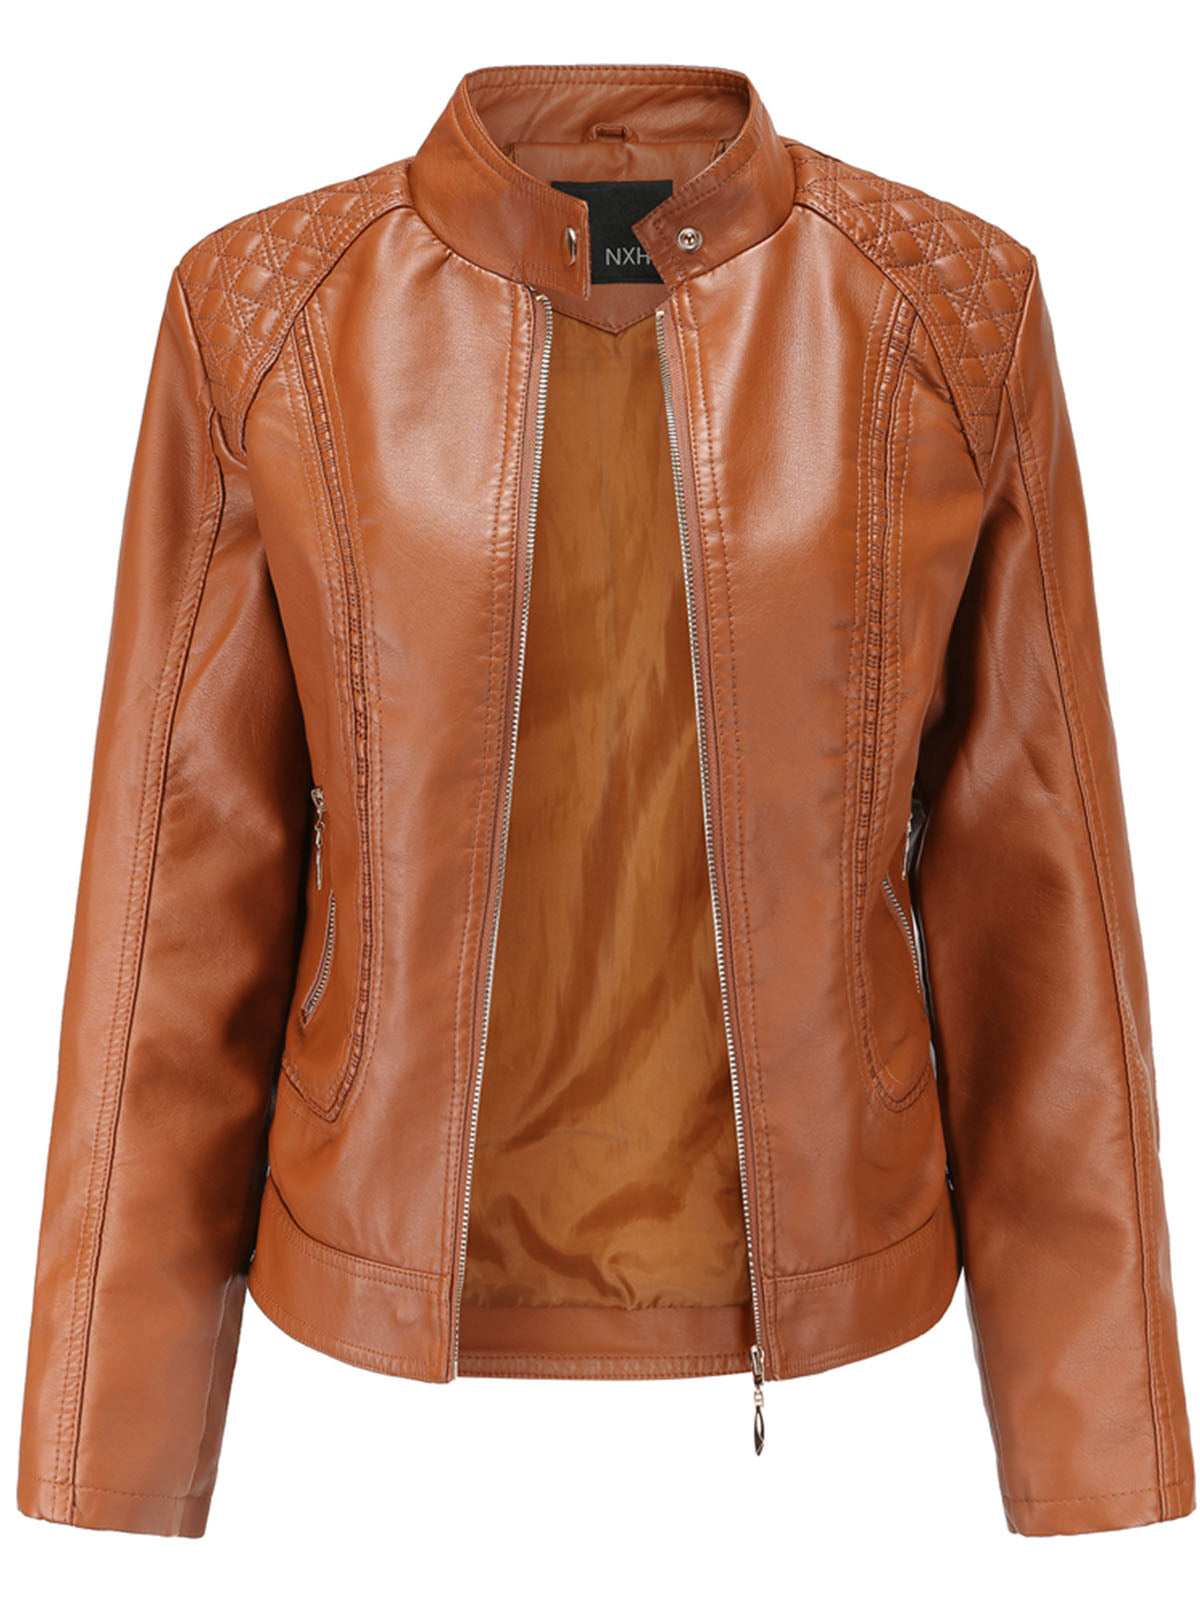 Soft Coat Long Sleeve PU Leather Motorcycle Jacket For Women